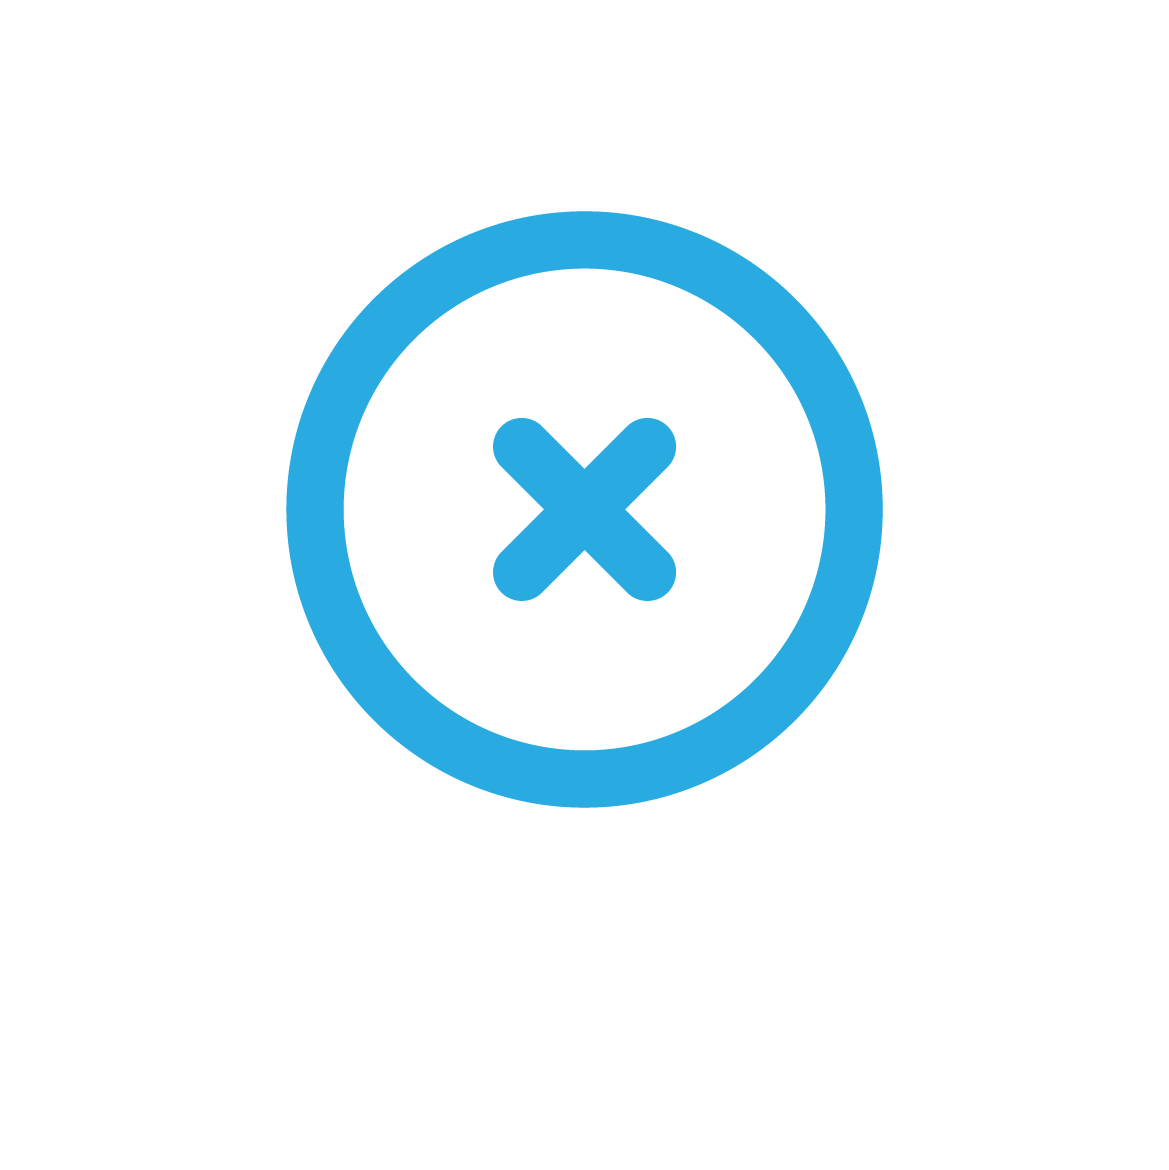 Annoying ads